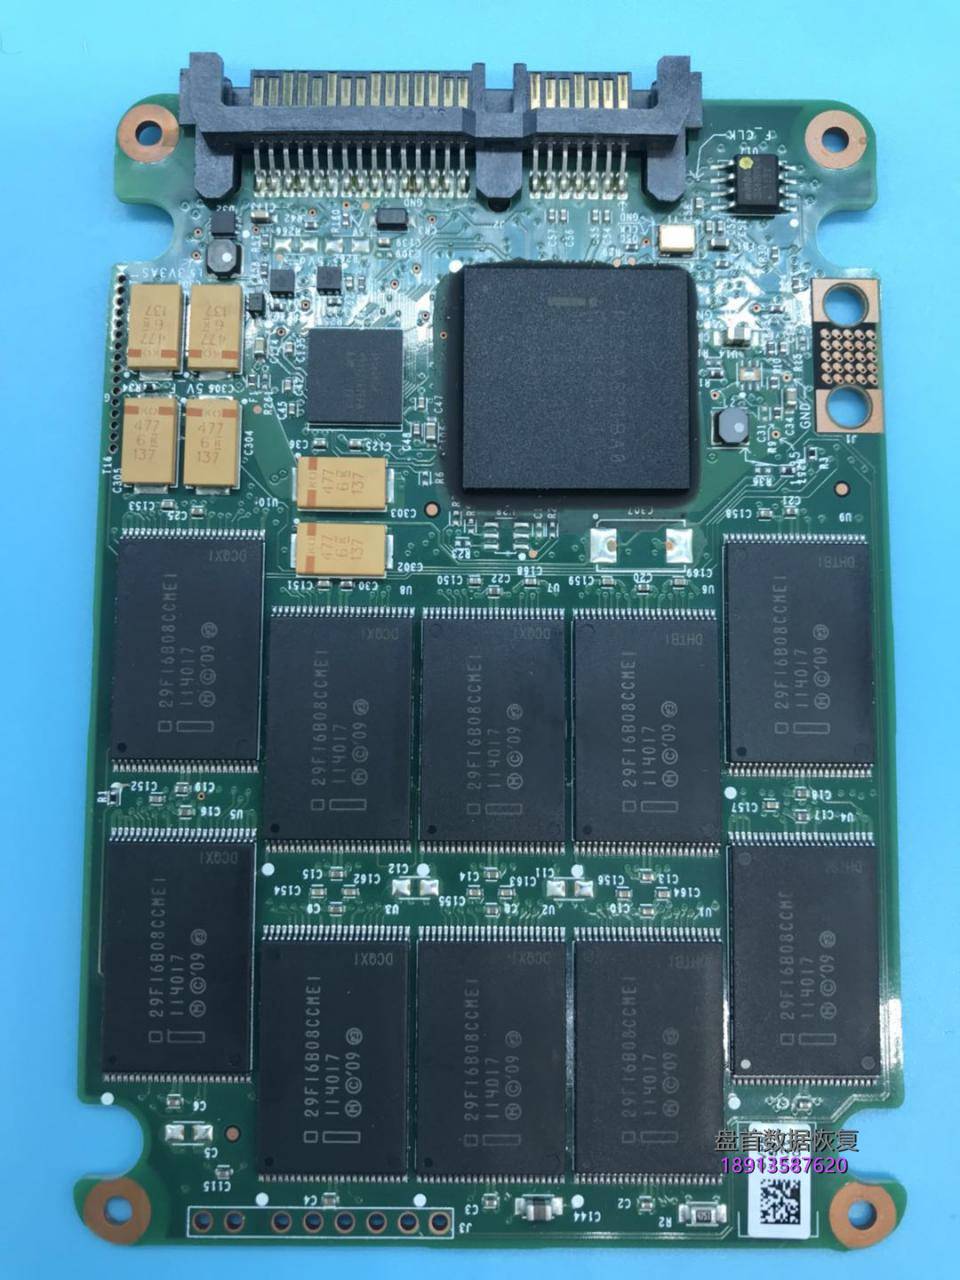 SSDSA2BW160G3L英特尔固态硬盘Intel320Series G3(160G)BIOS容量只能识别8M数据恢复成功